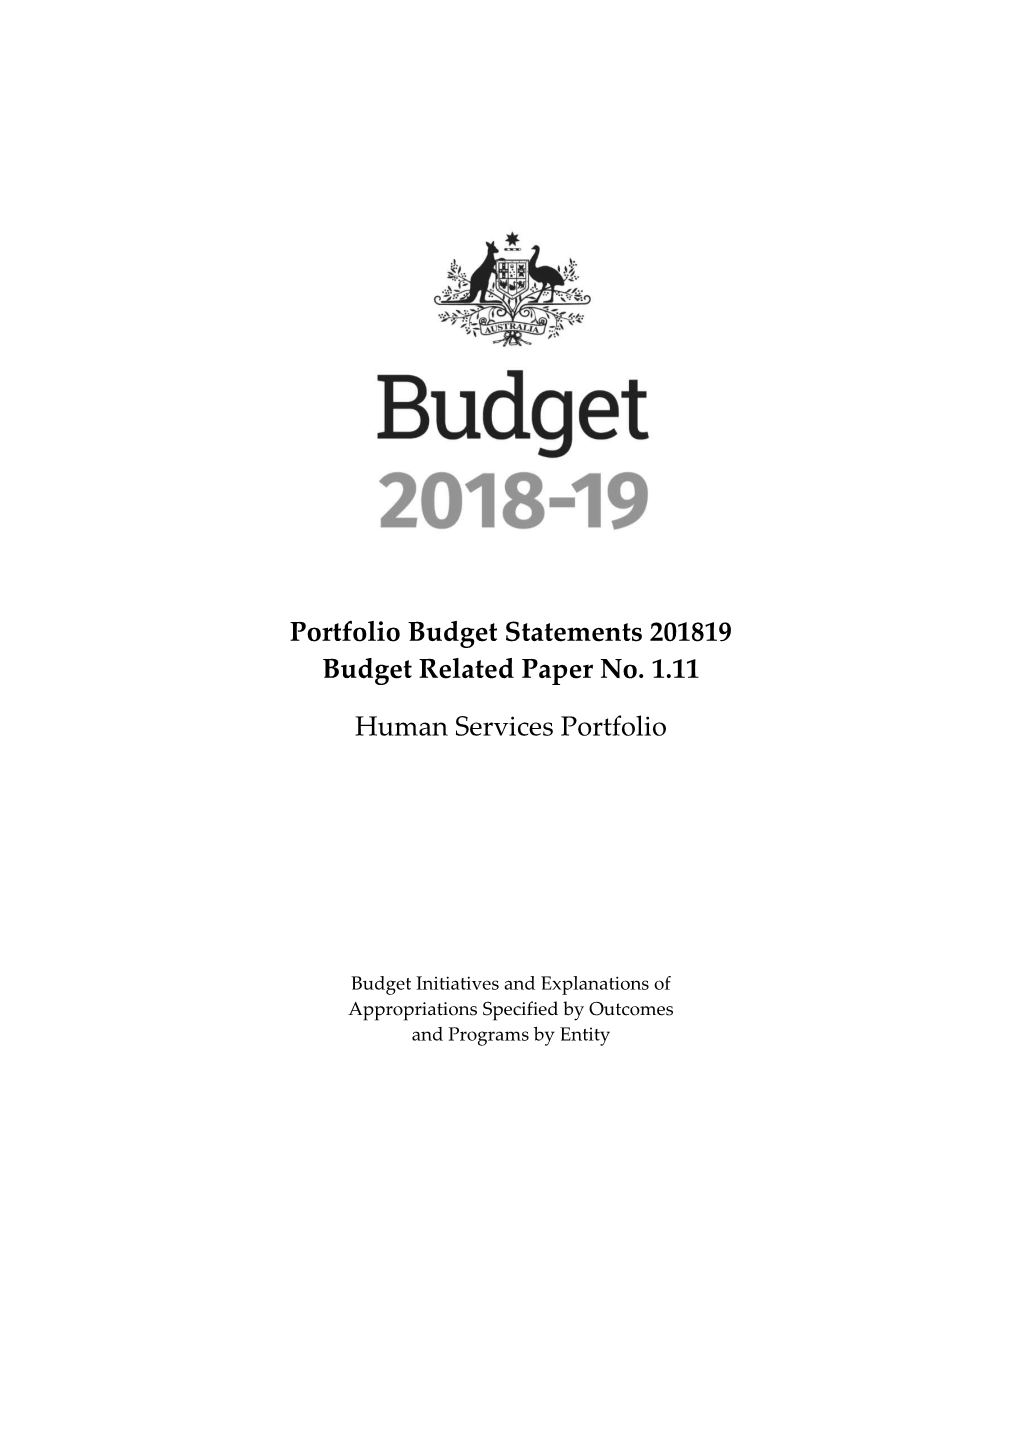 Budget 2018-19 Portfolio Budget Statements